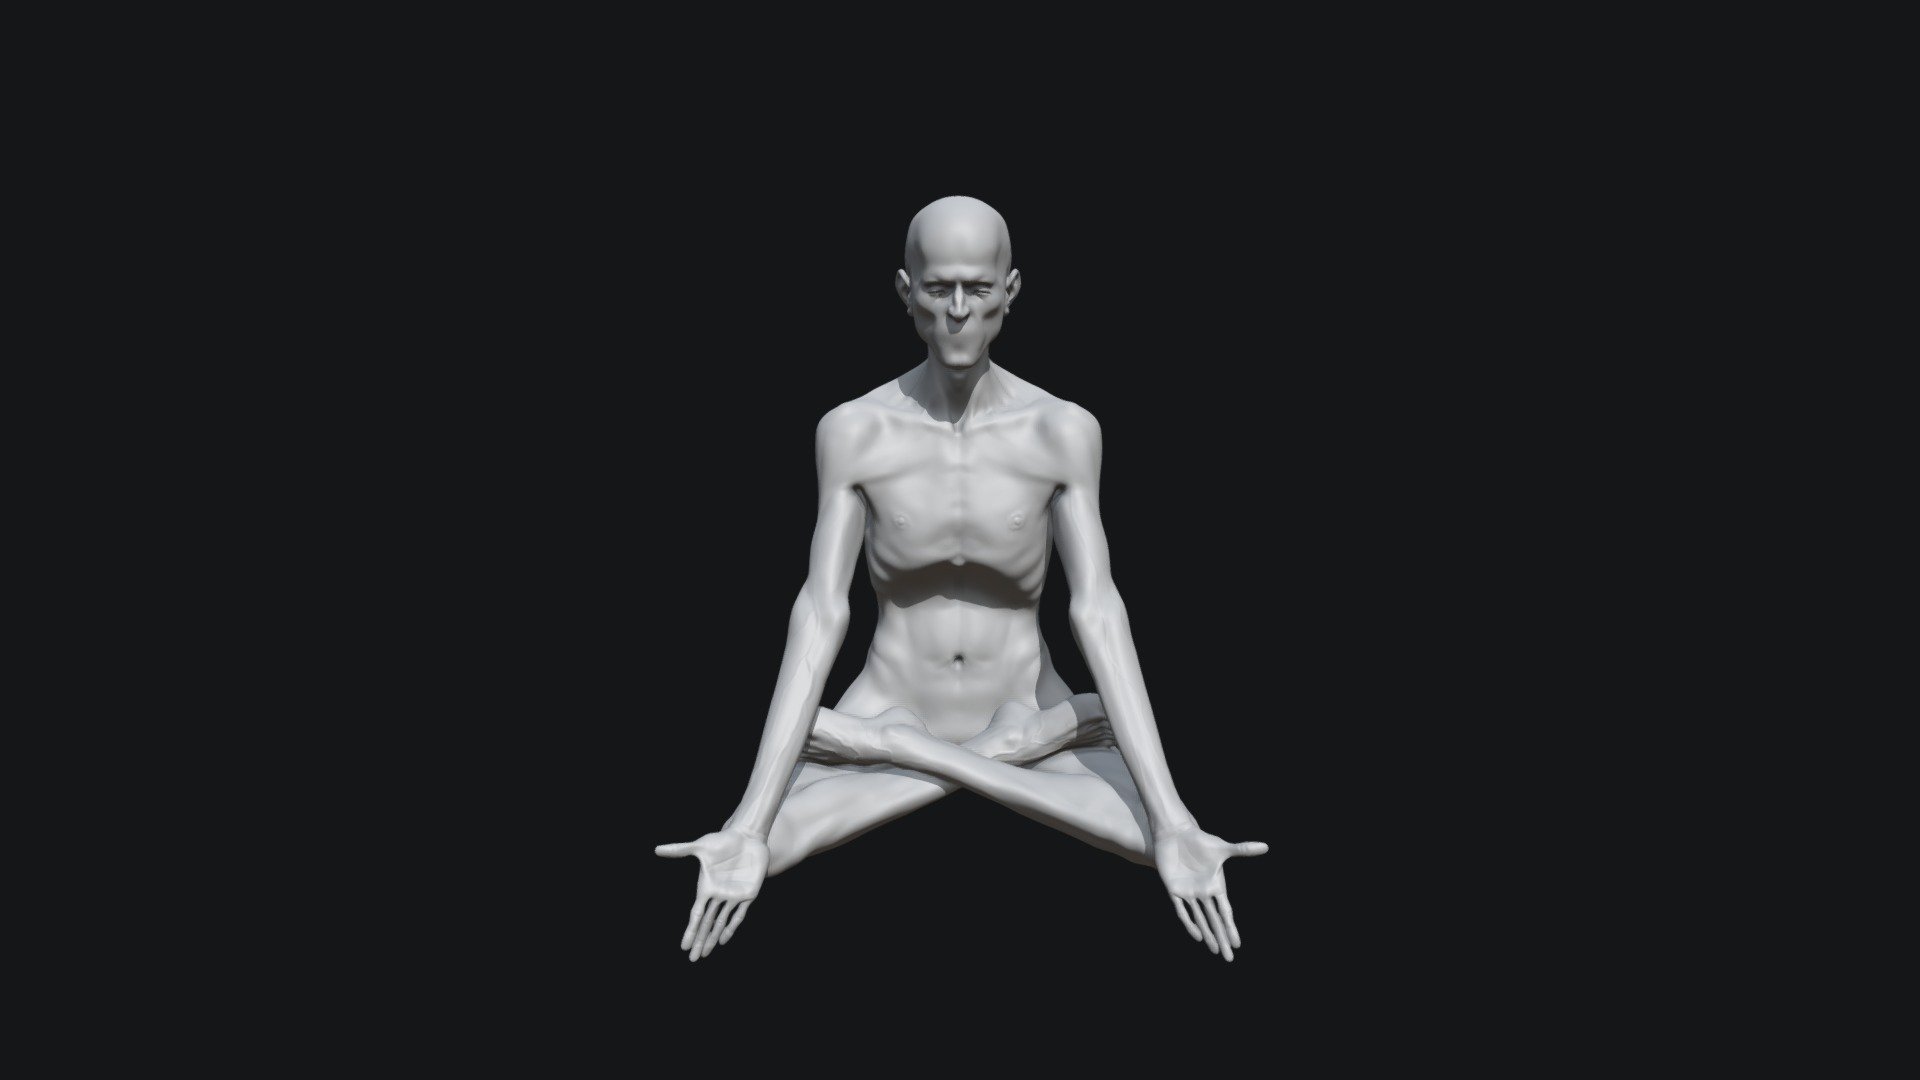 fnnj - Meditation - 3D model by KateuszMaminski 3d model